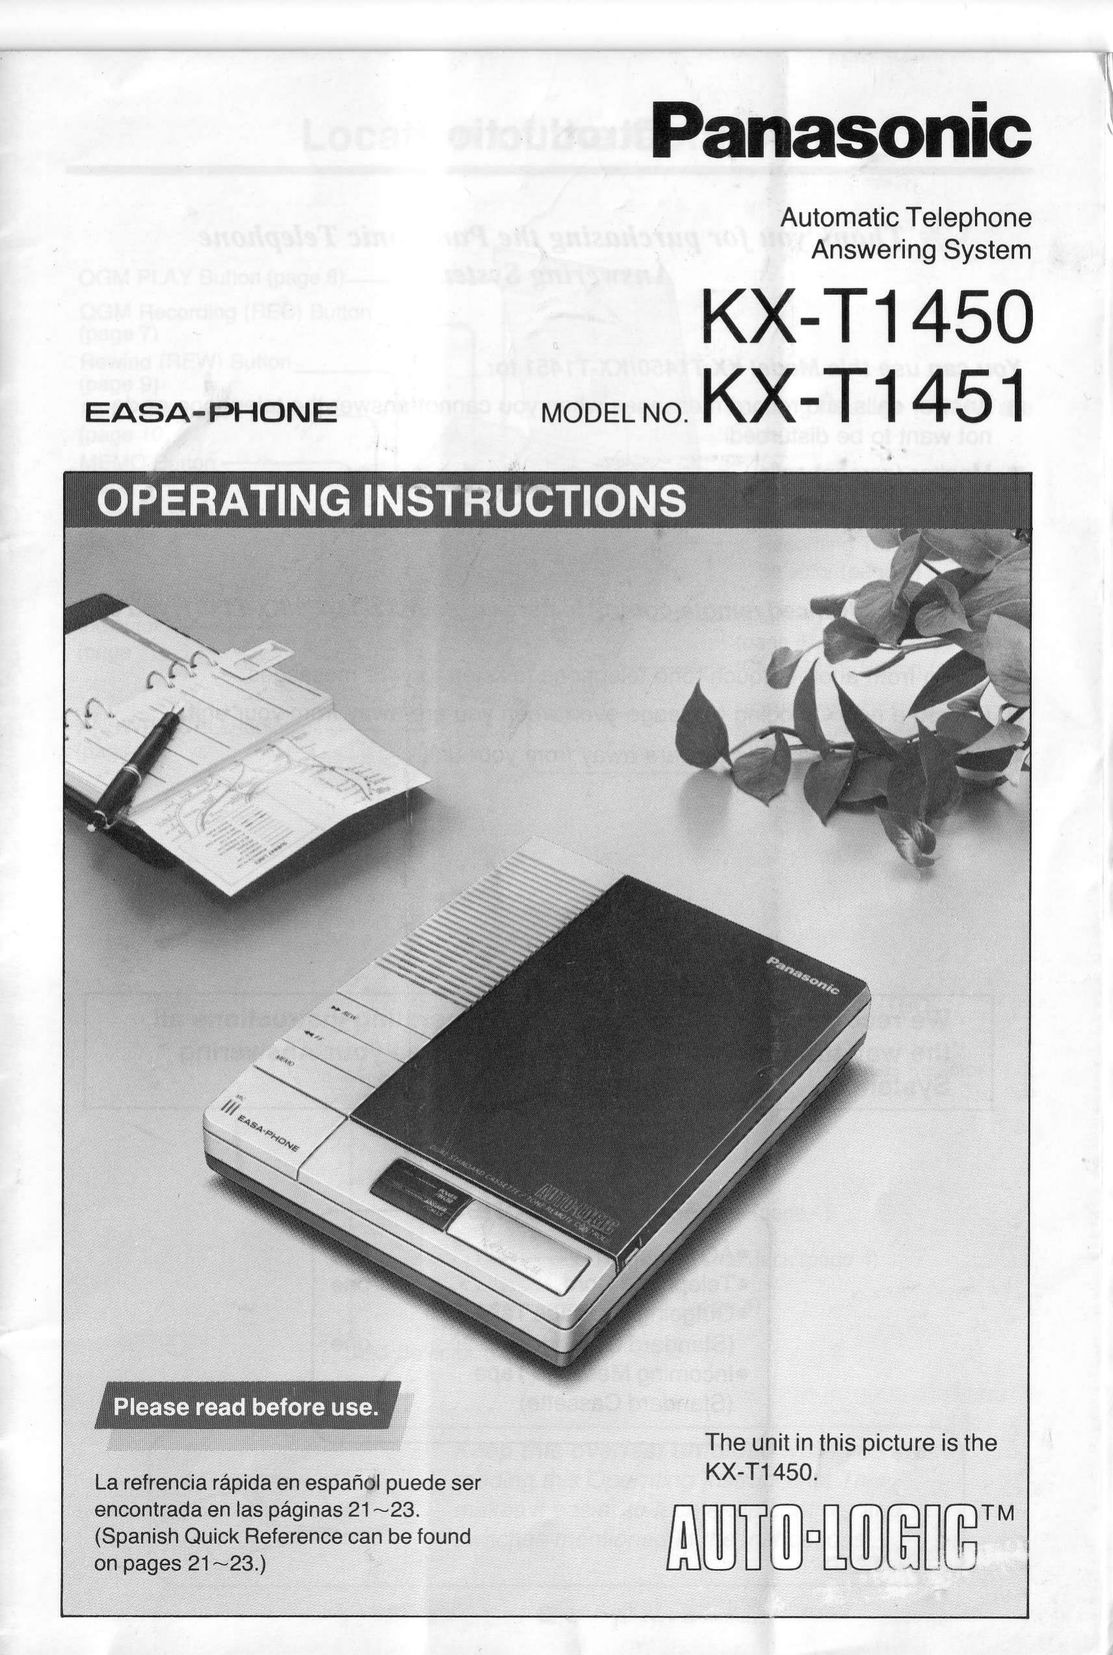 Panasonic KX-T1450 Answering Machine User Manual